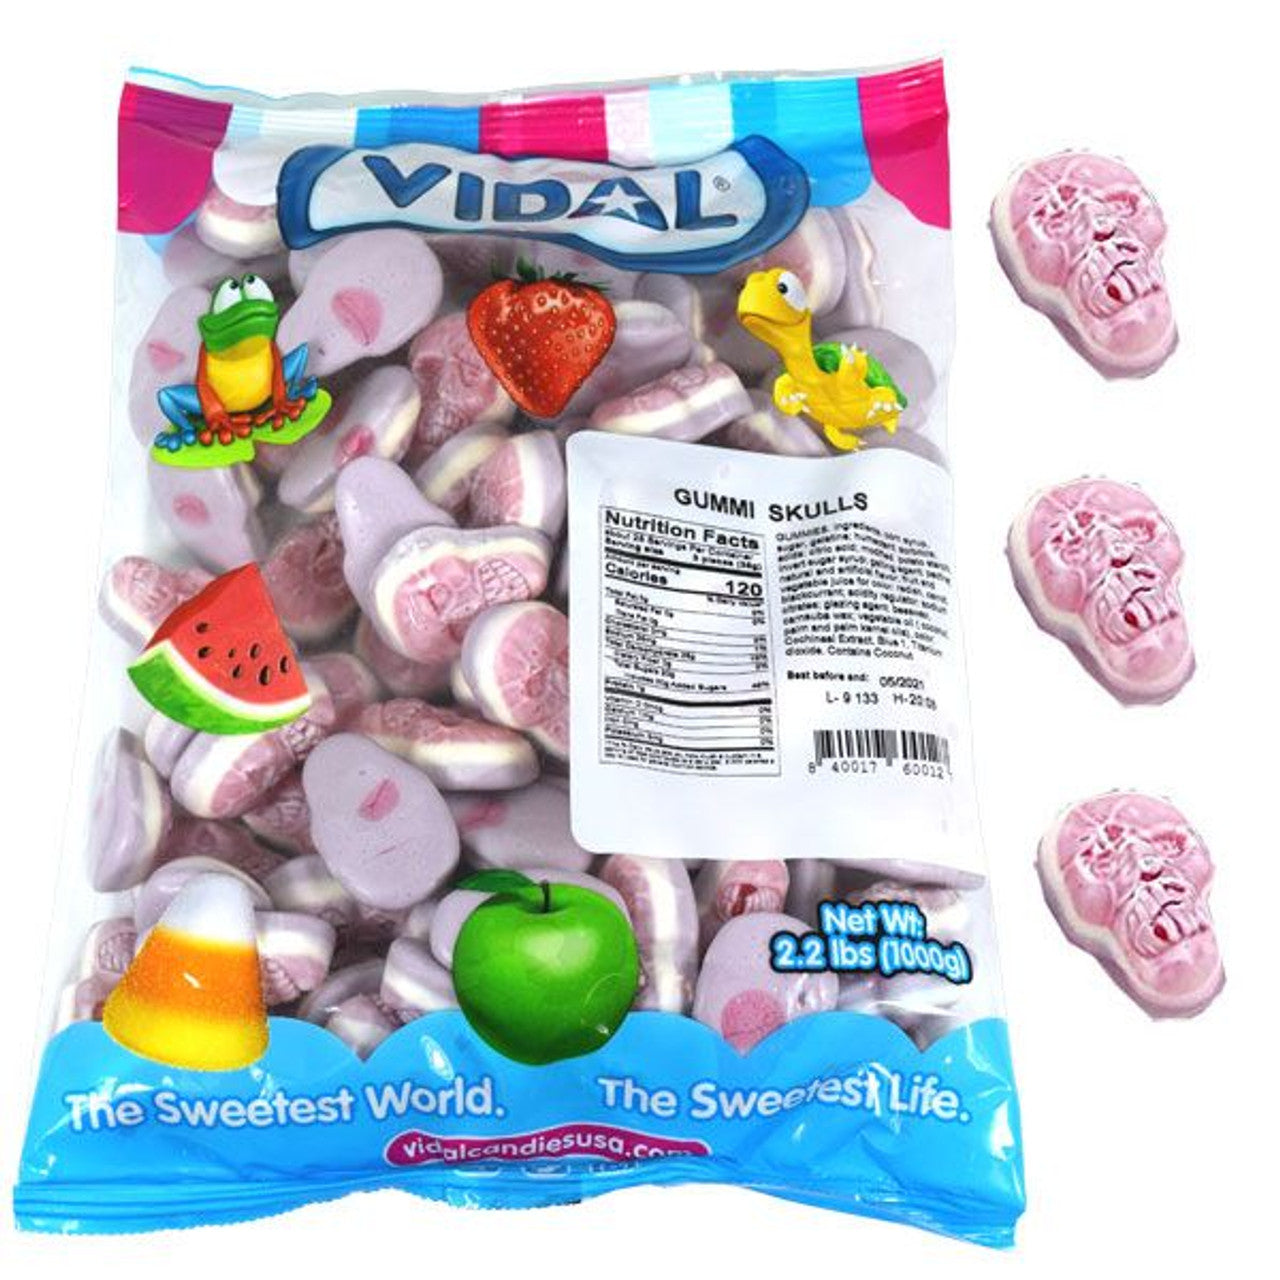 Vidal Gummi Jelly Skulls Bag 2.2lb - 1ct